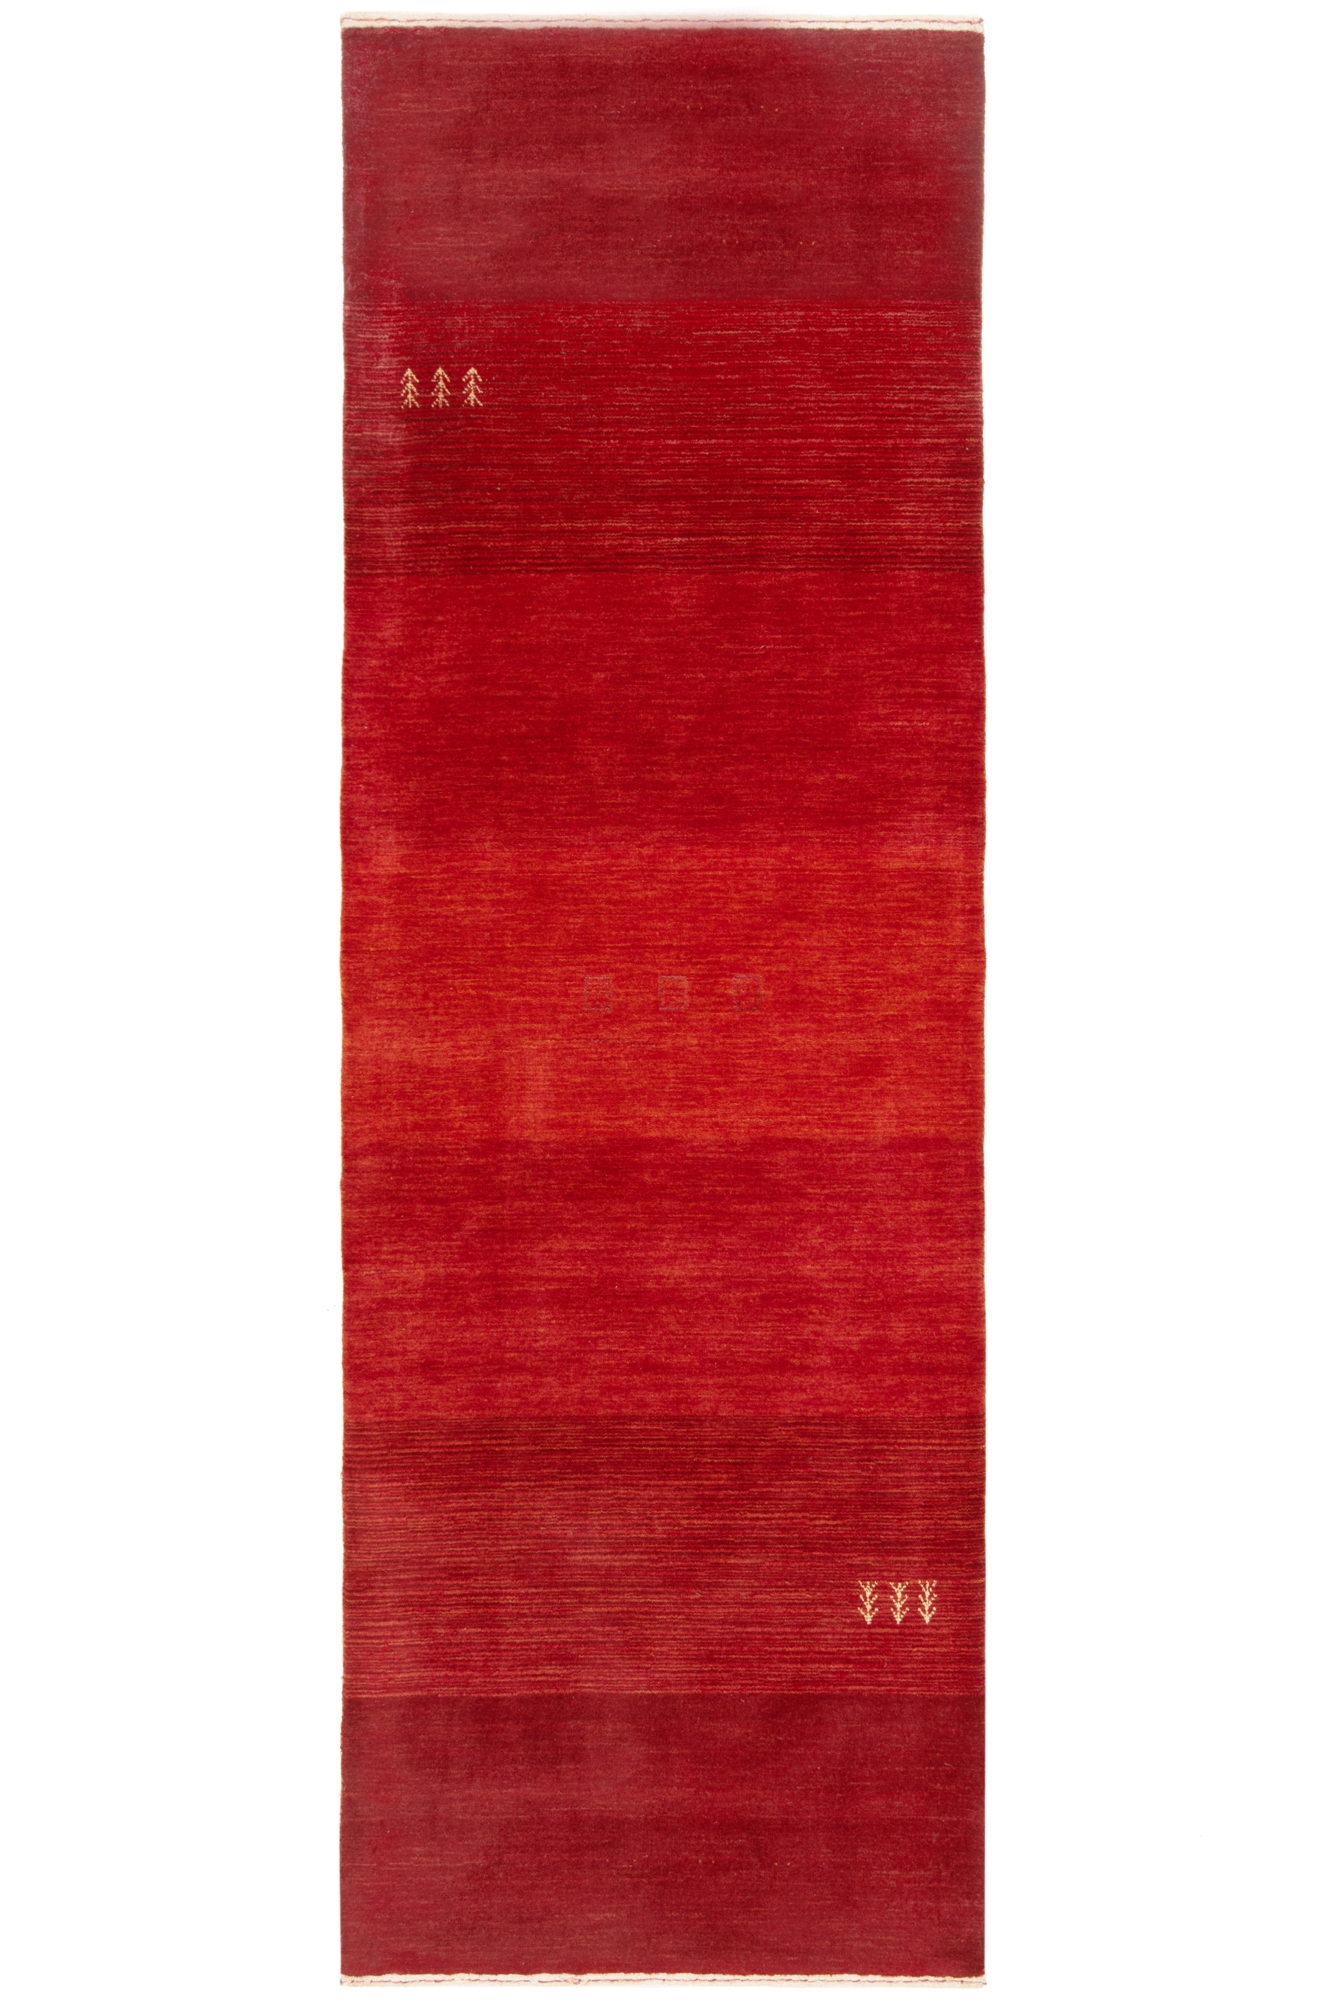 Handloom Rug Red 246 x 82 cm